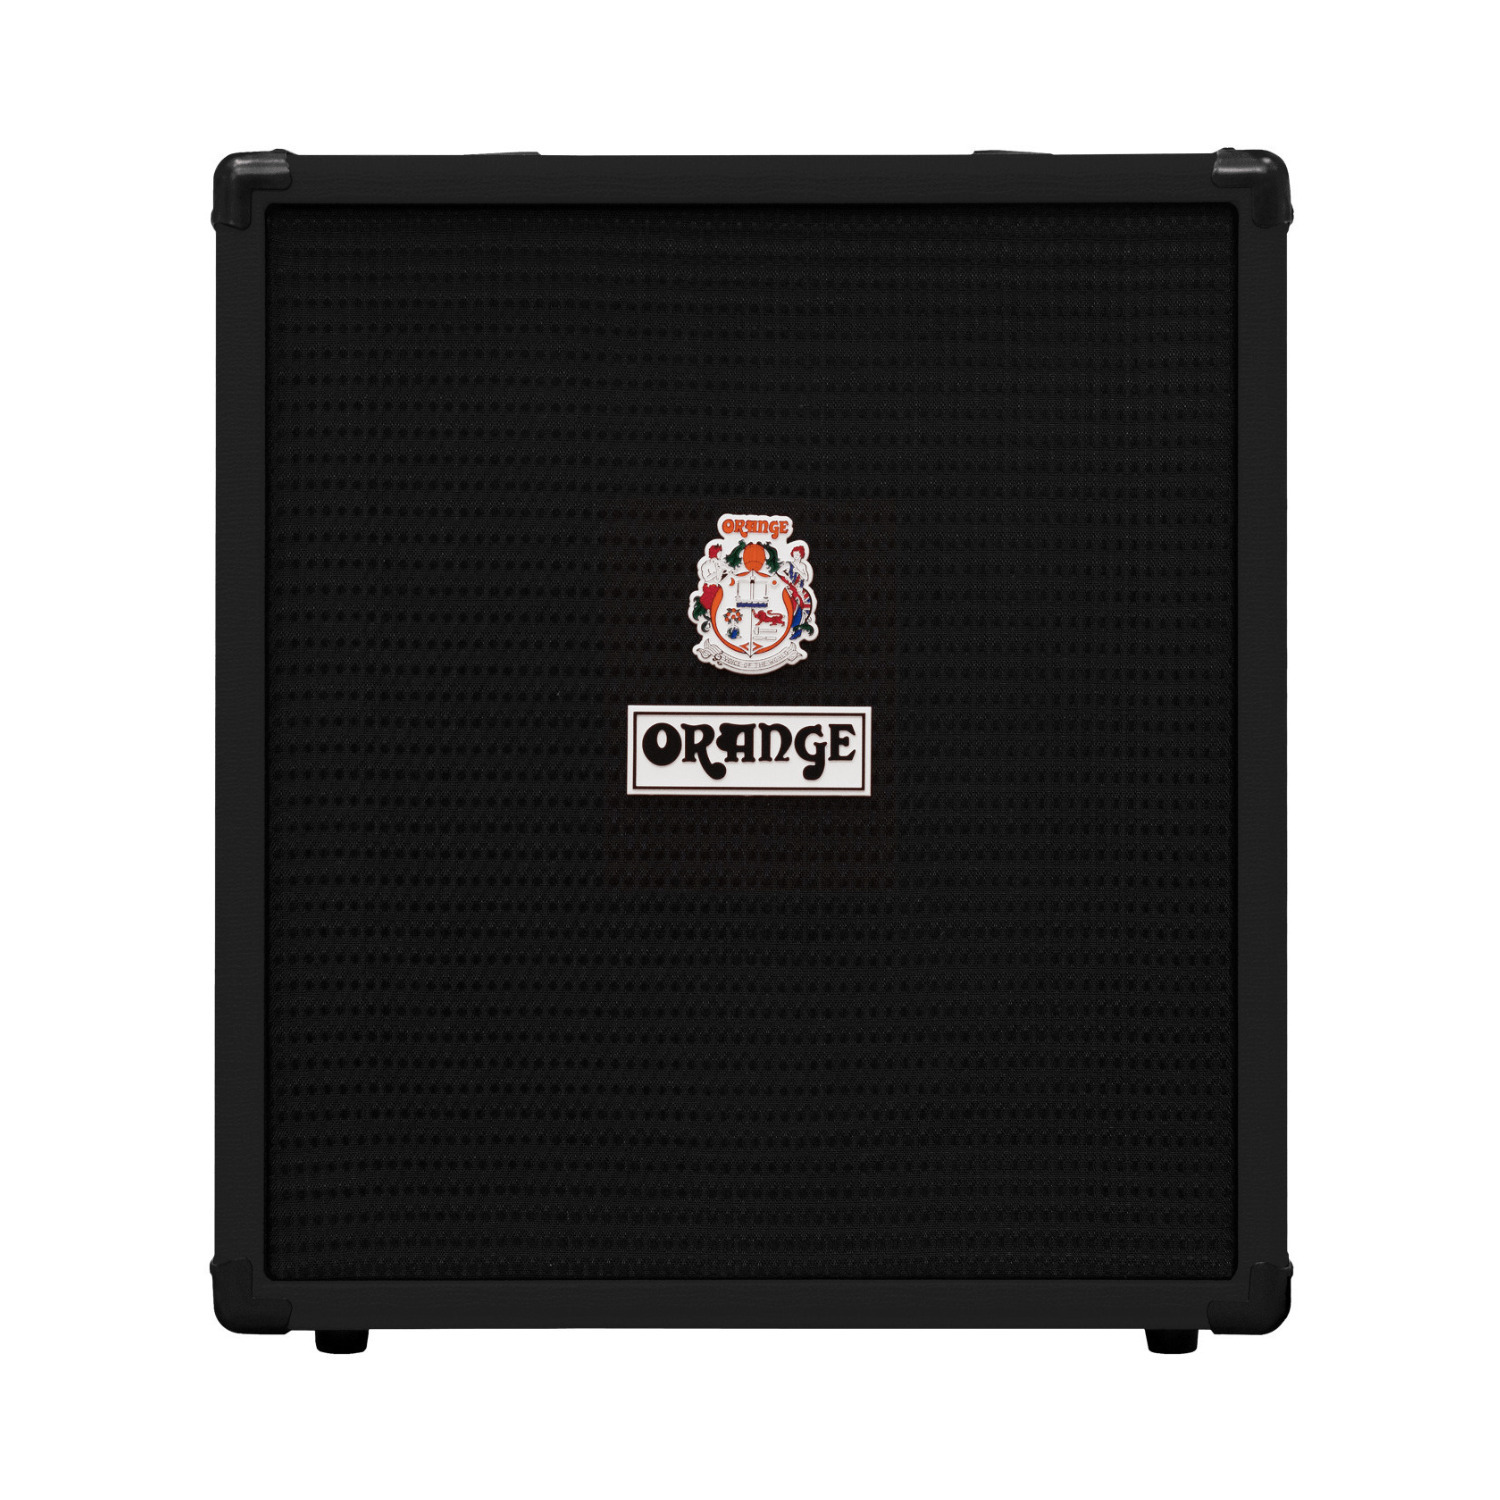 Orange Amps 50W 1x12 Bass Combo Amp in Black -  Crush Bass 50 Black